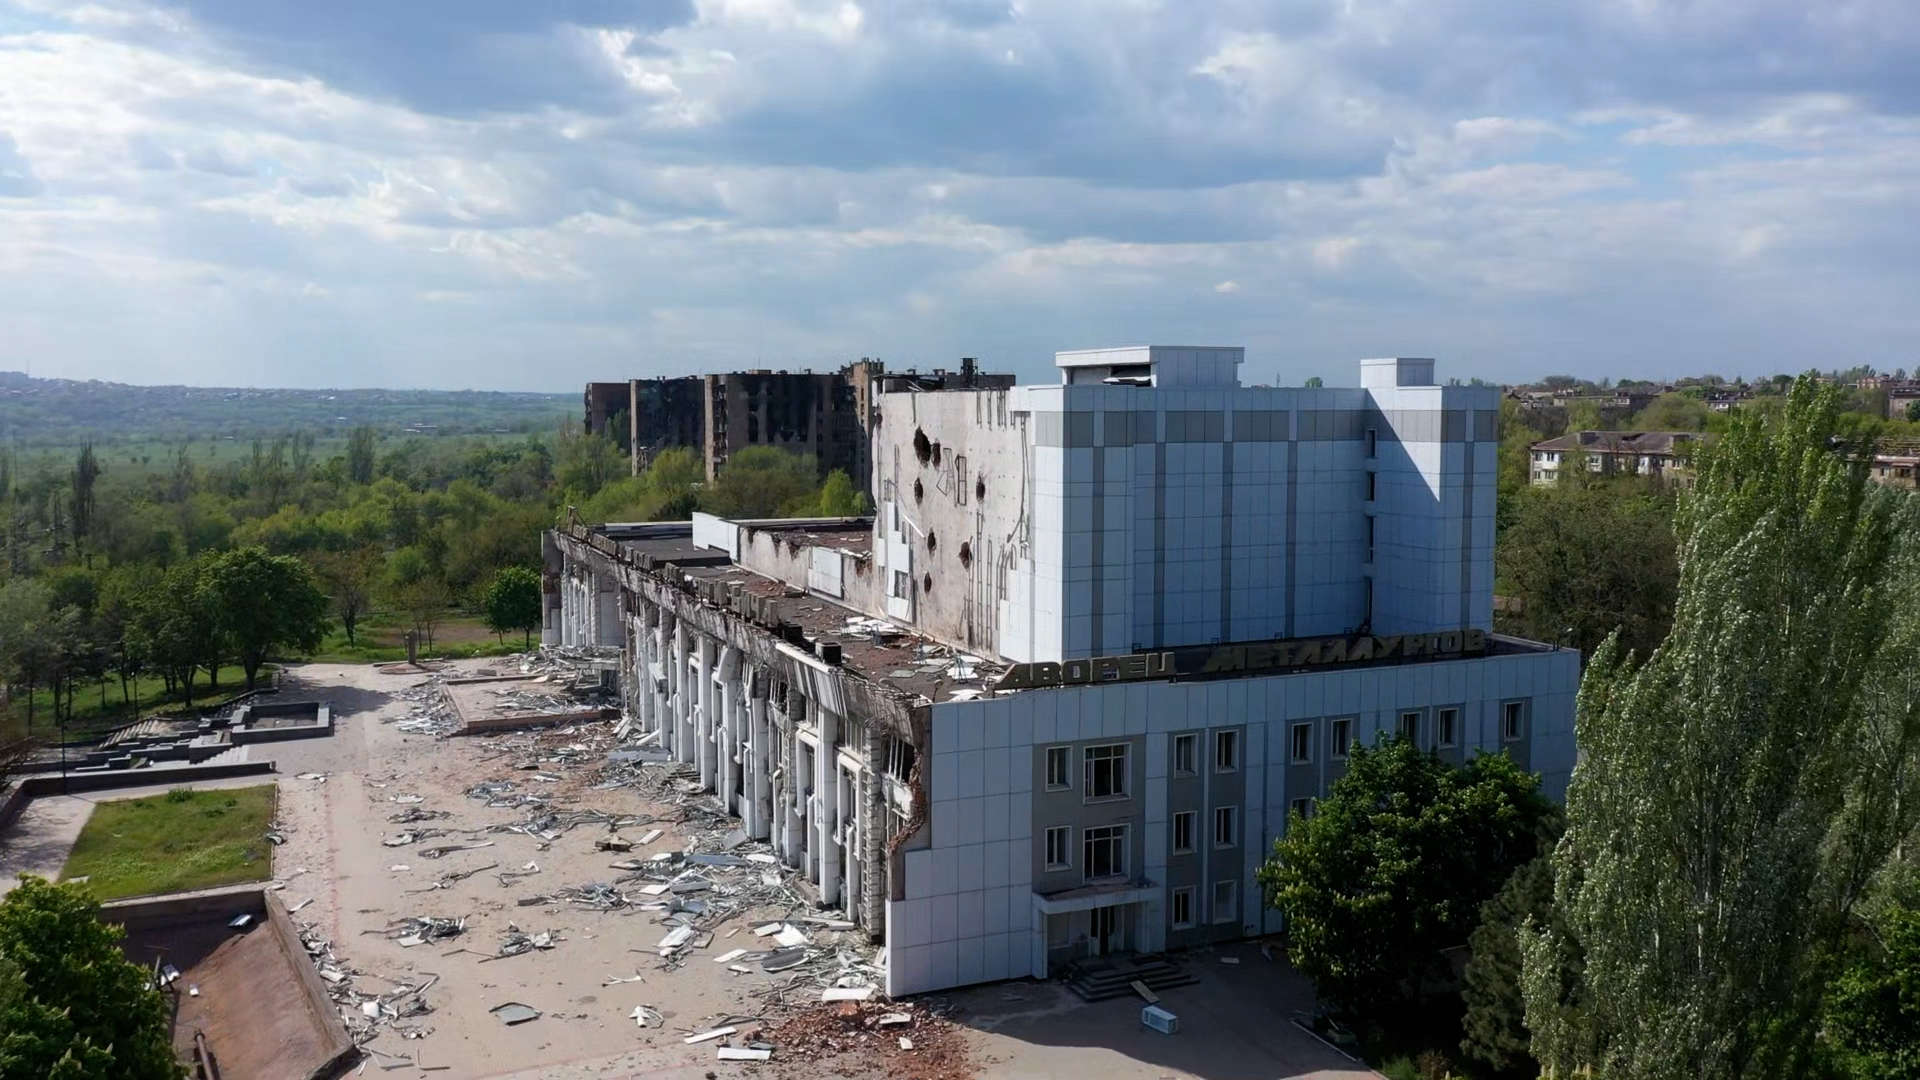 Дворец металлургов в Мариуполе разрушен полностью Видео,ФАН-ТВ